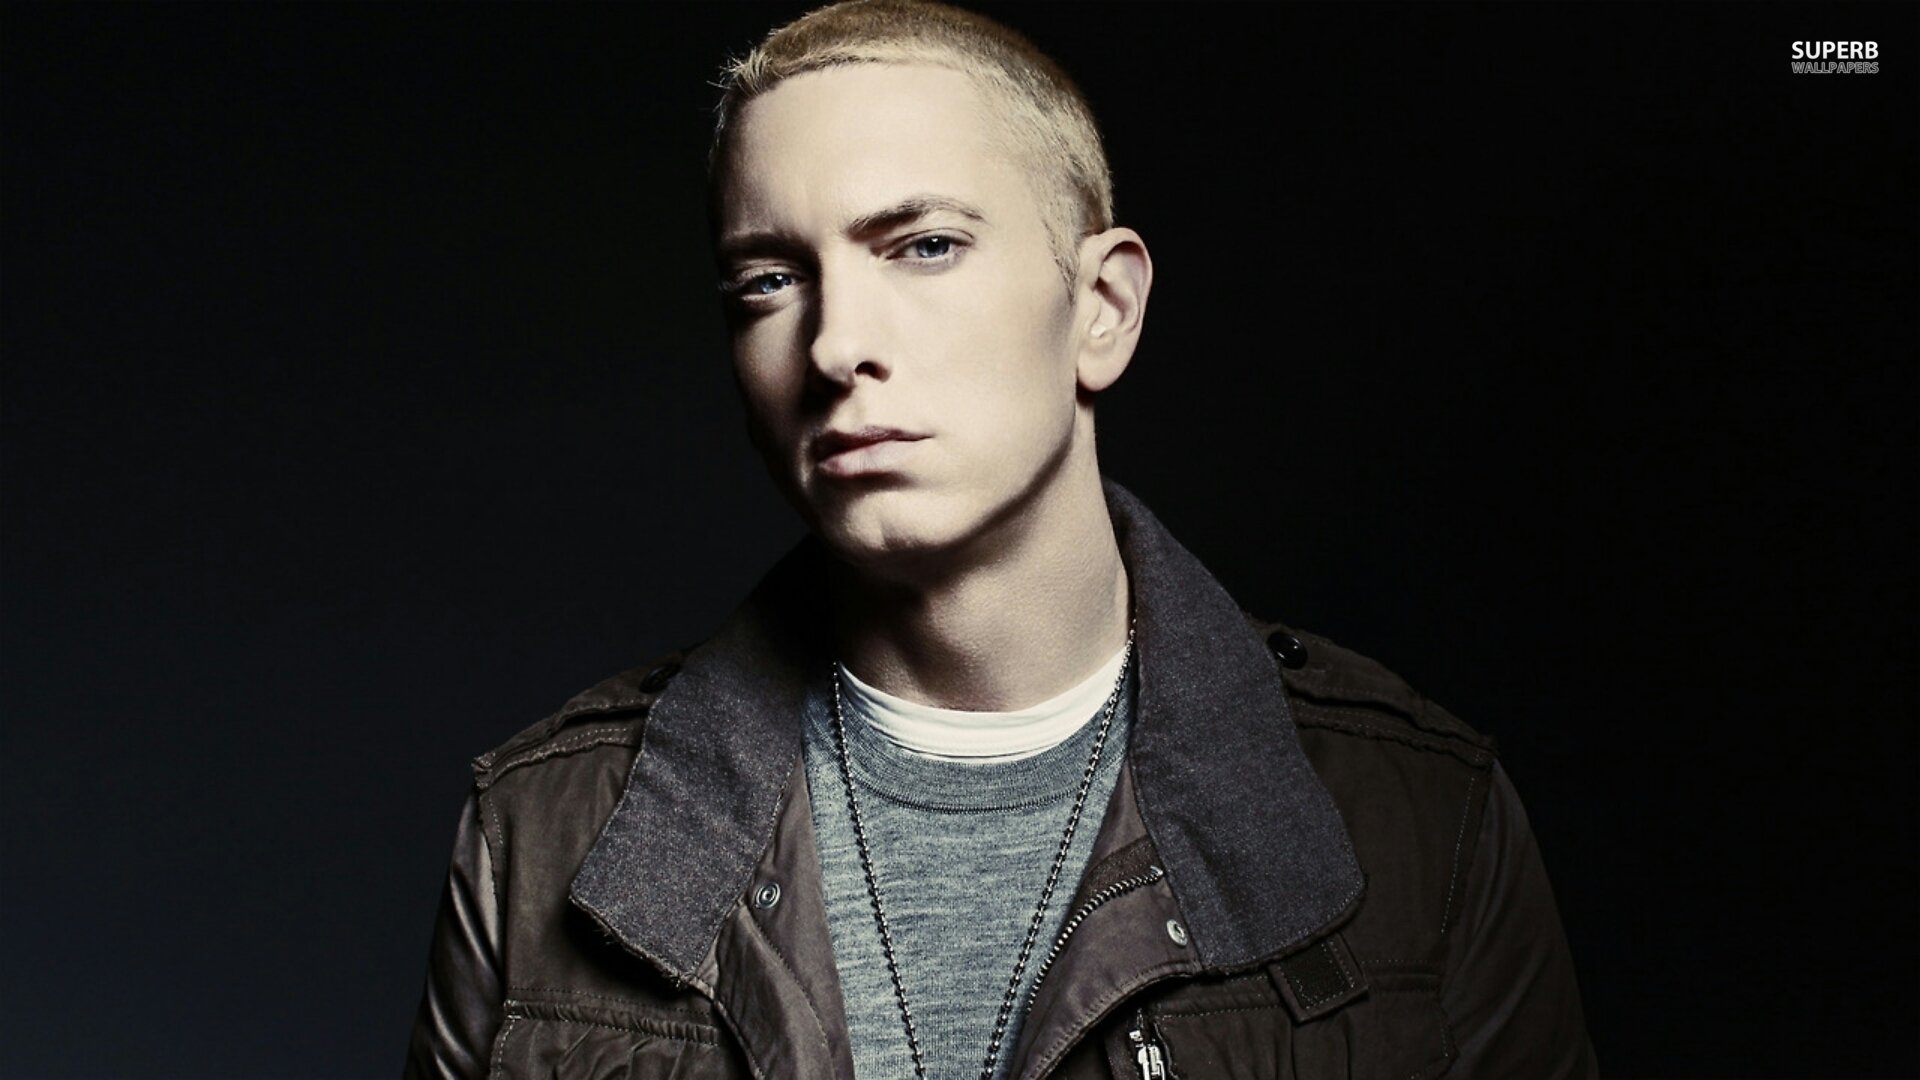 Free Eminem high quality wallpaper ID:452188 for hd 1920x1080 desktop